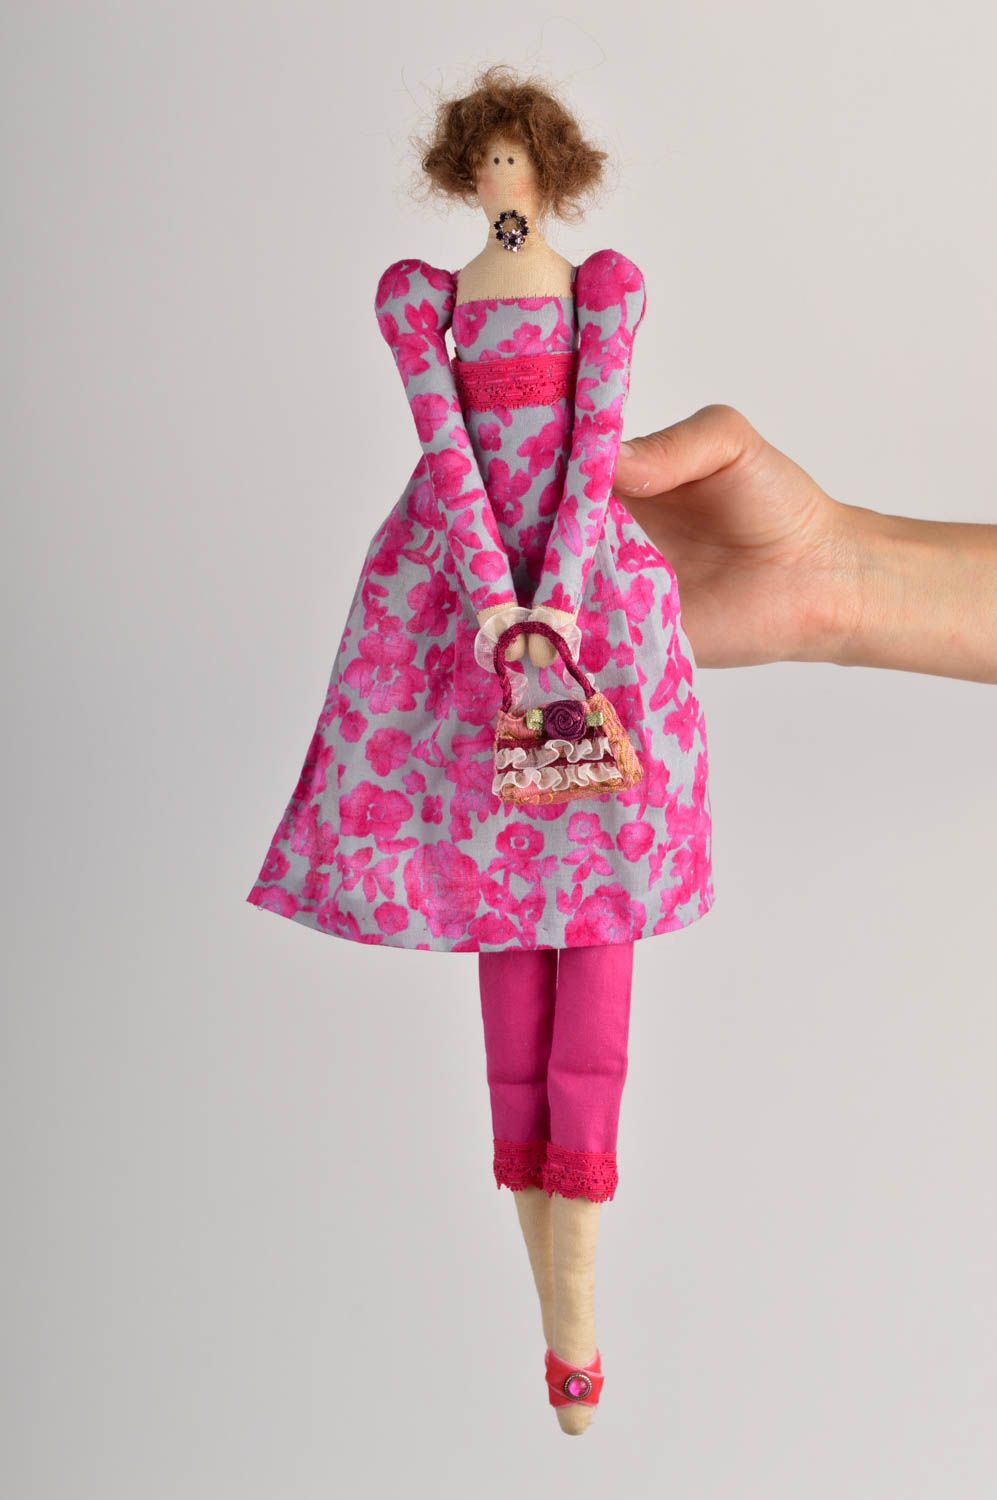 Muñeca de peluche hecha a mano juguete de tela regalo original para niña foto 5